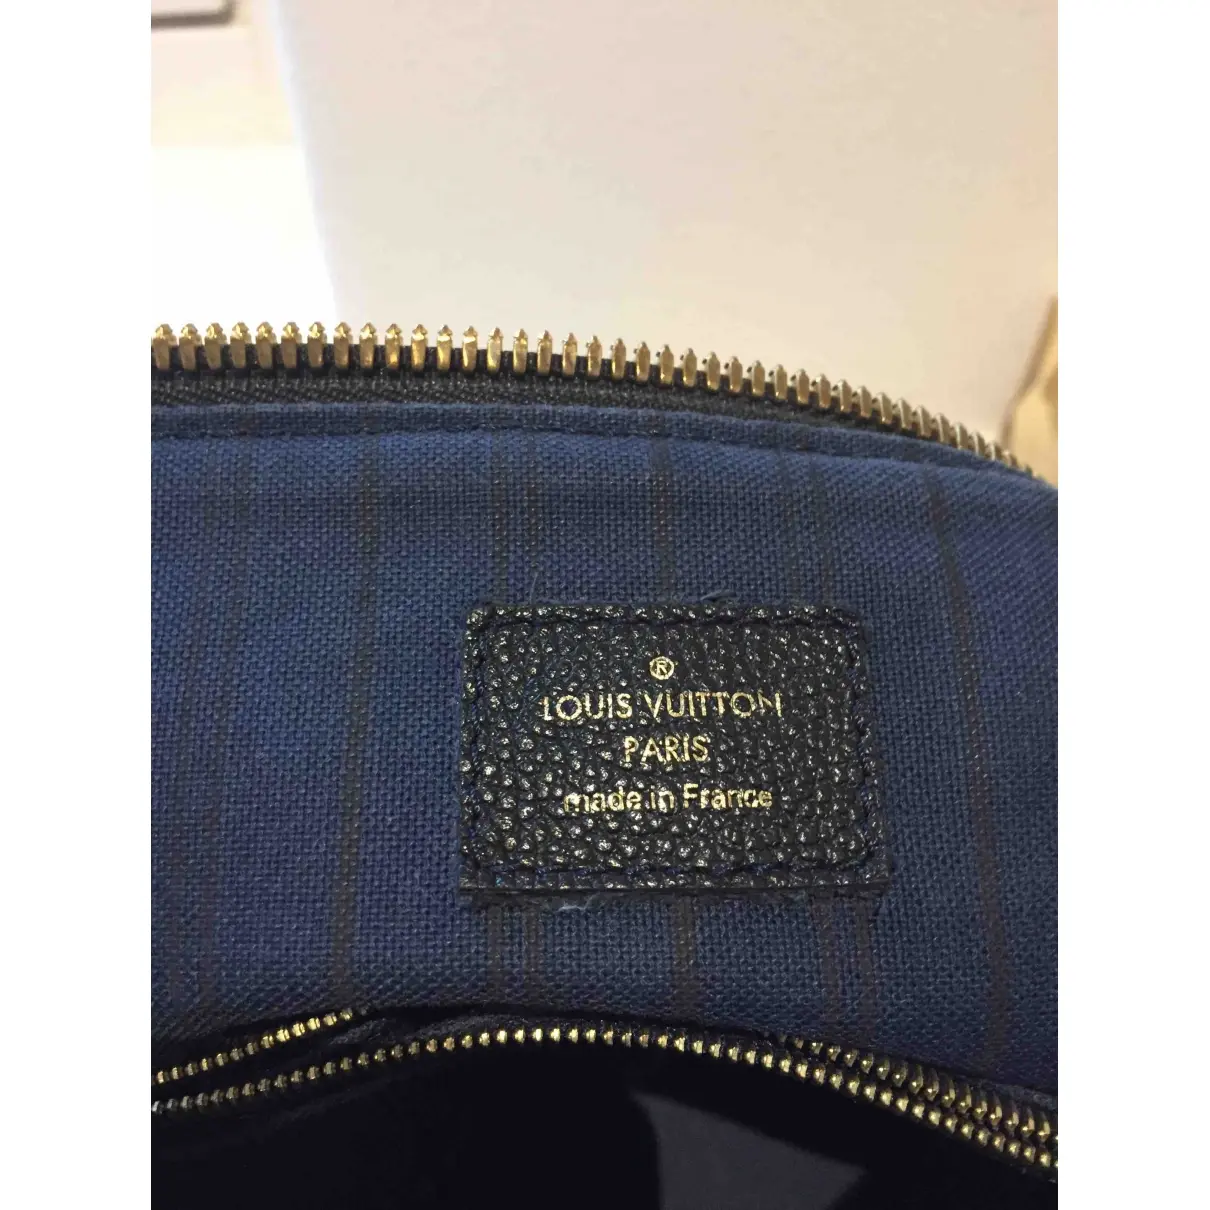 Buy Louis Vuitton Lumineuse leather handbag online